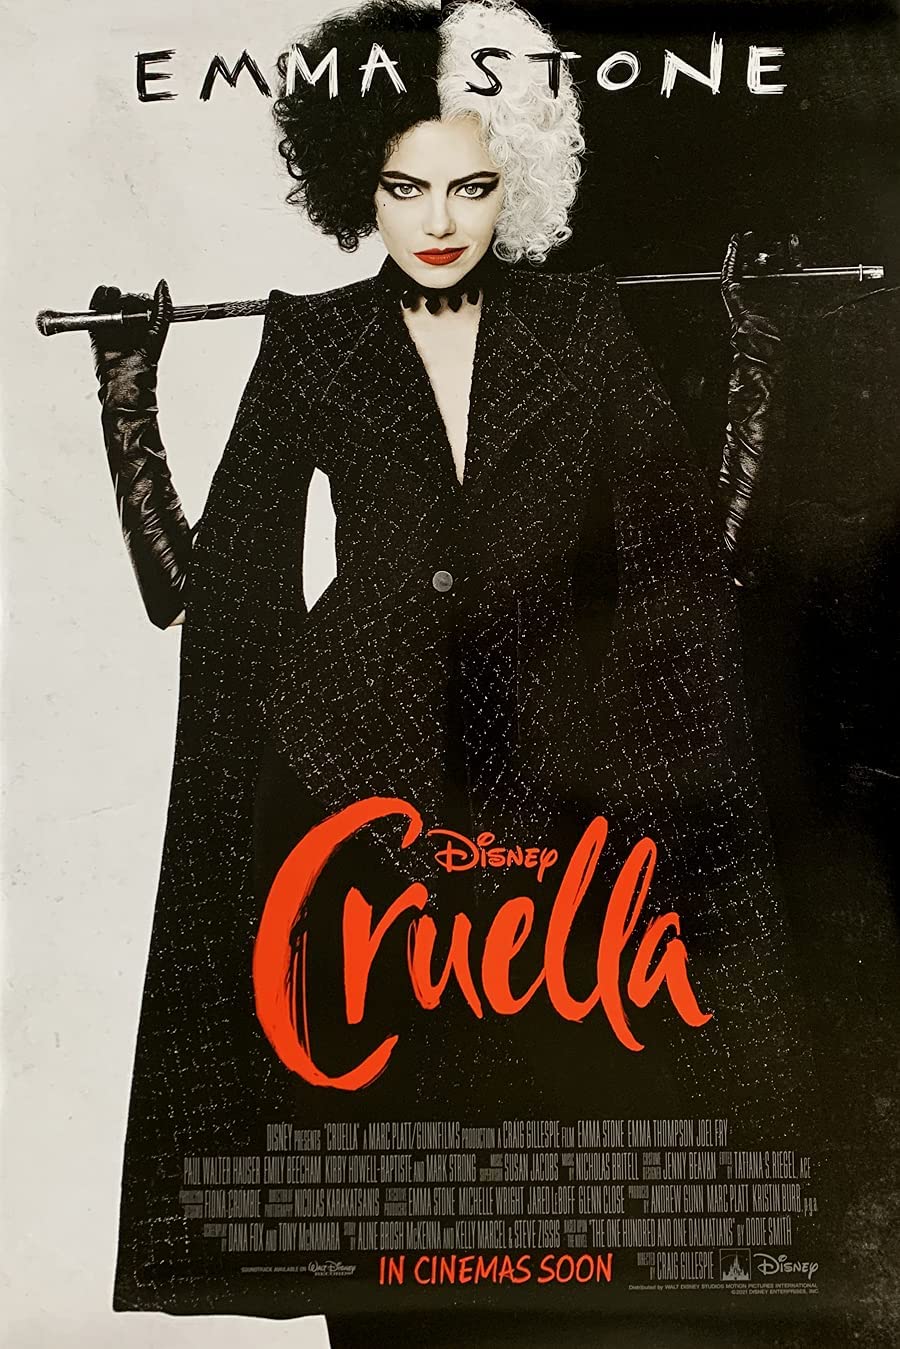 Graphic image of the poster for Cruella